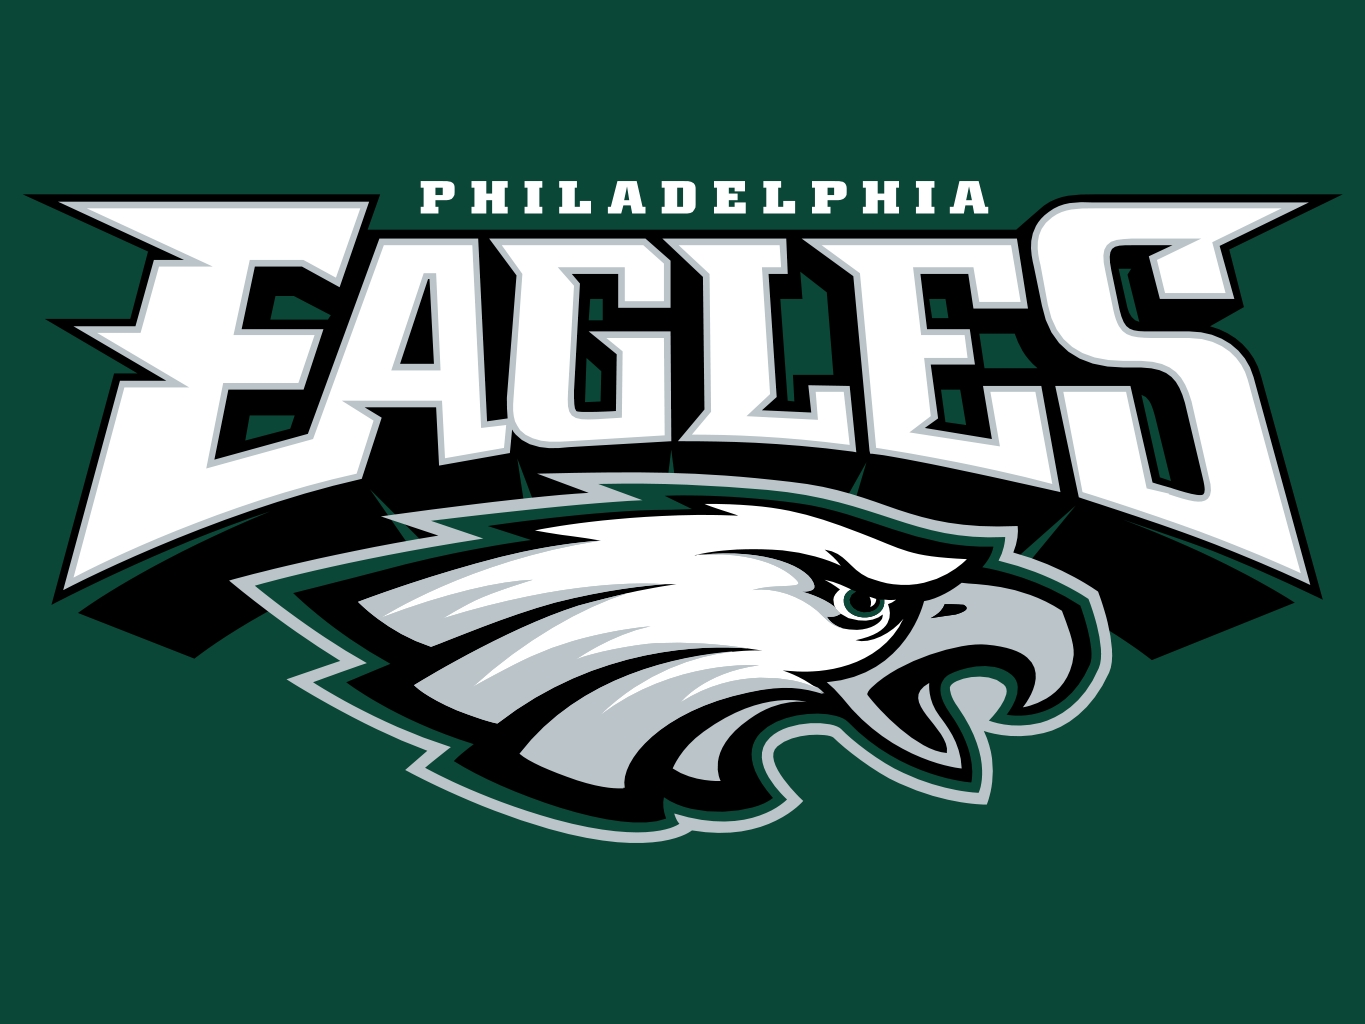 buy Philadelphia Eagles tickets